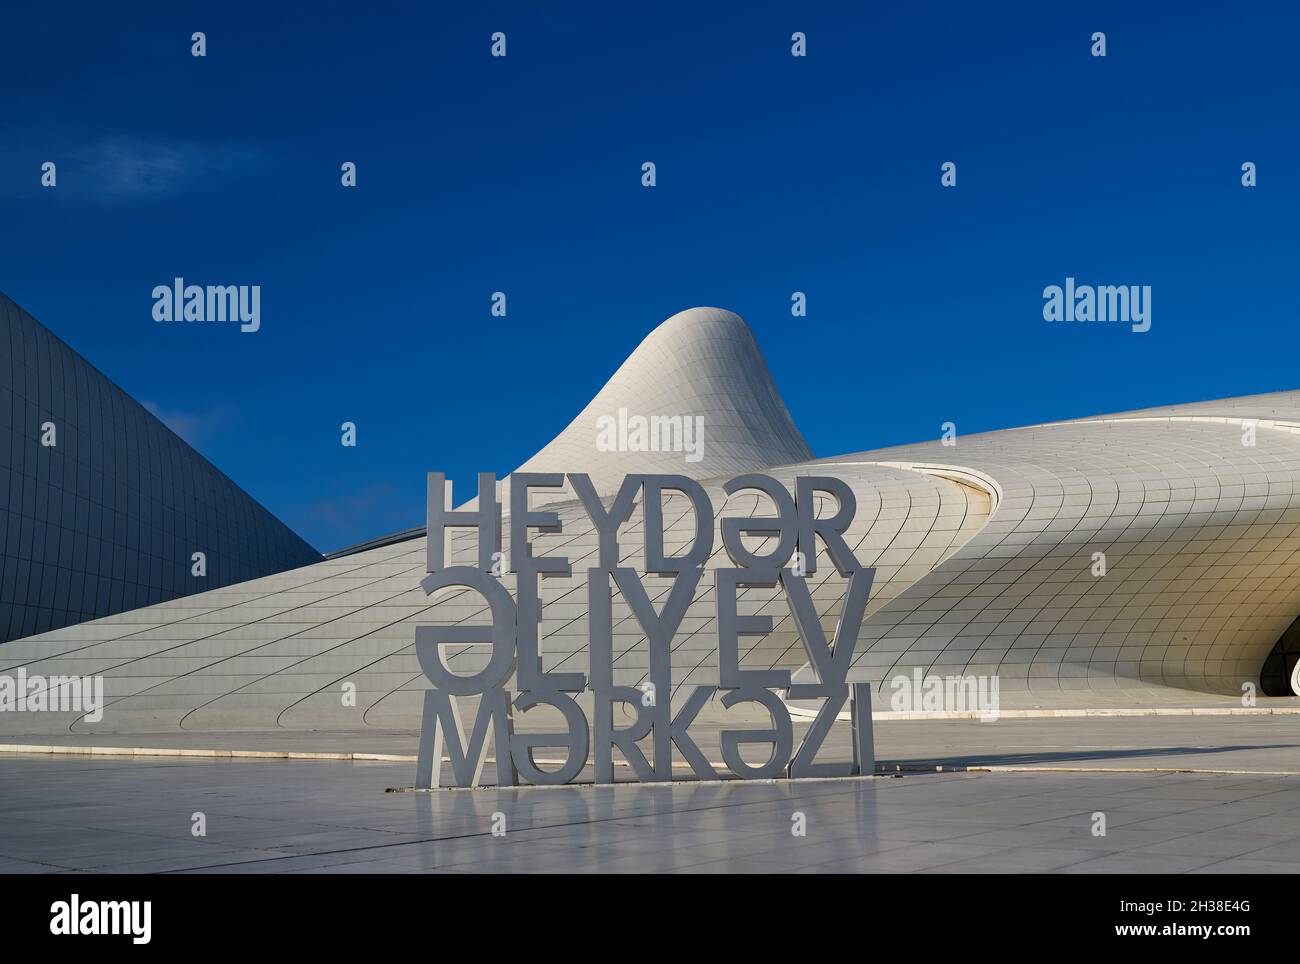 Baku, Azerbaijan - February 4, 2020: Abstract design of the Heydar Aliyev Center landmark in Baku Azerbaijan designed by Zaha Hadid that serves as a c Stock Photo